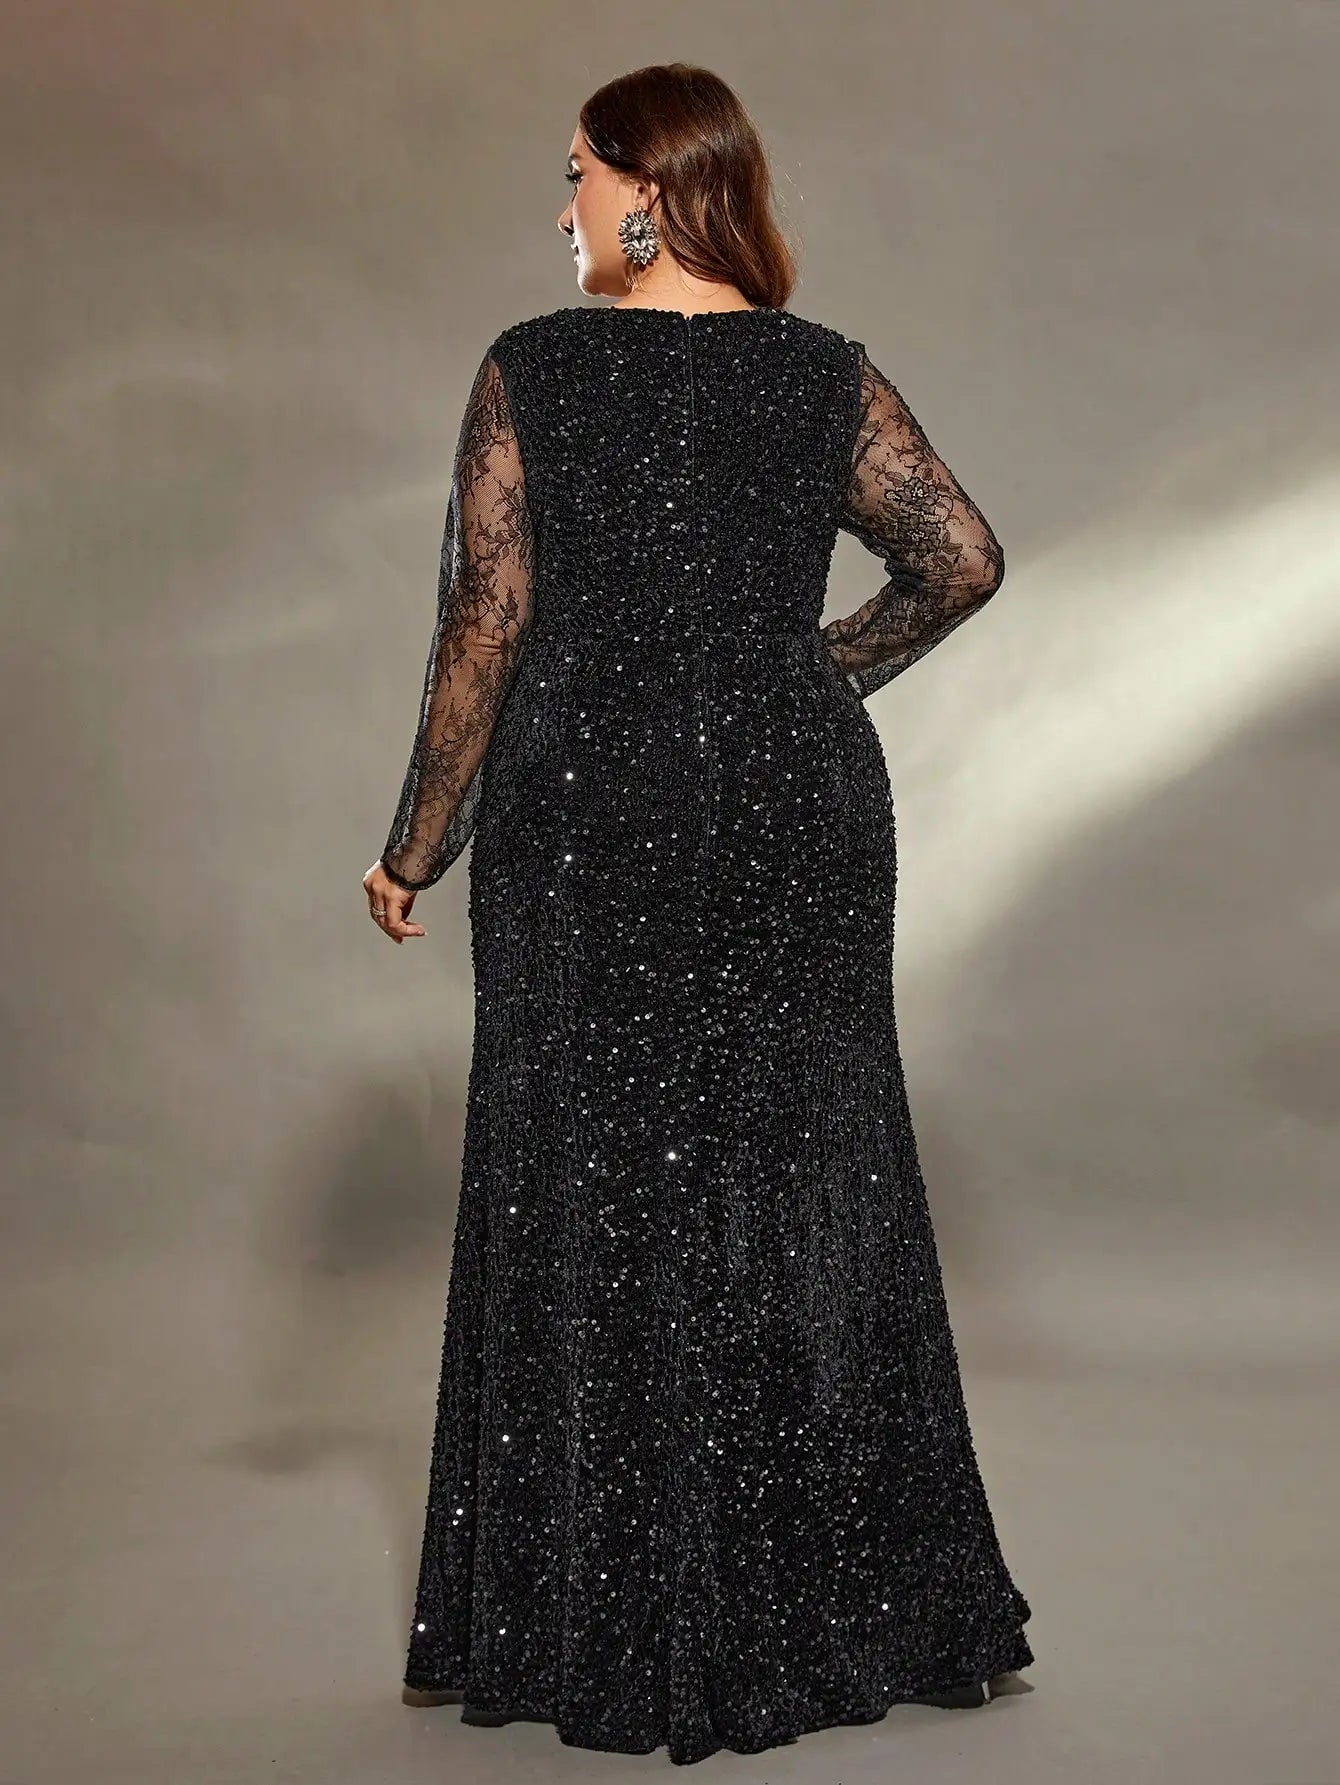 Mgiacy plus size  Queen neckline lace long sleeve slim sequin slit fishtail Dress Evening gown Ball dress Party dress